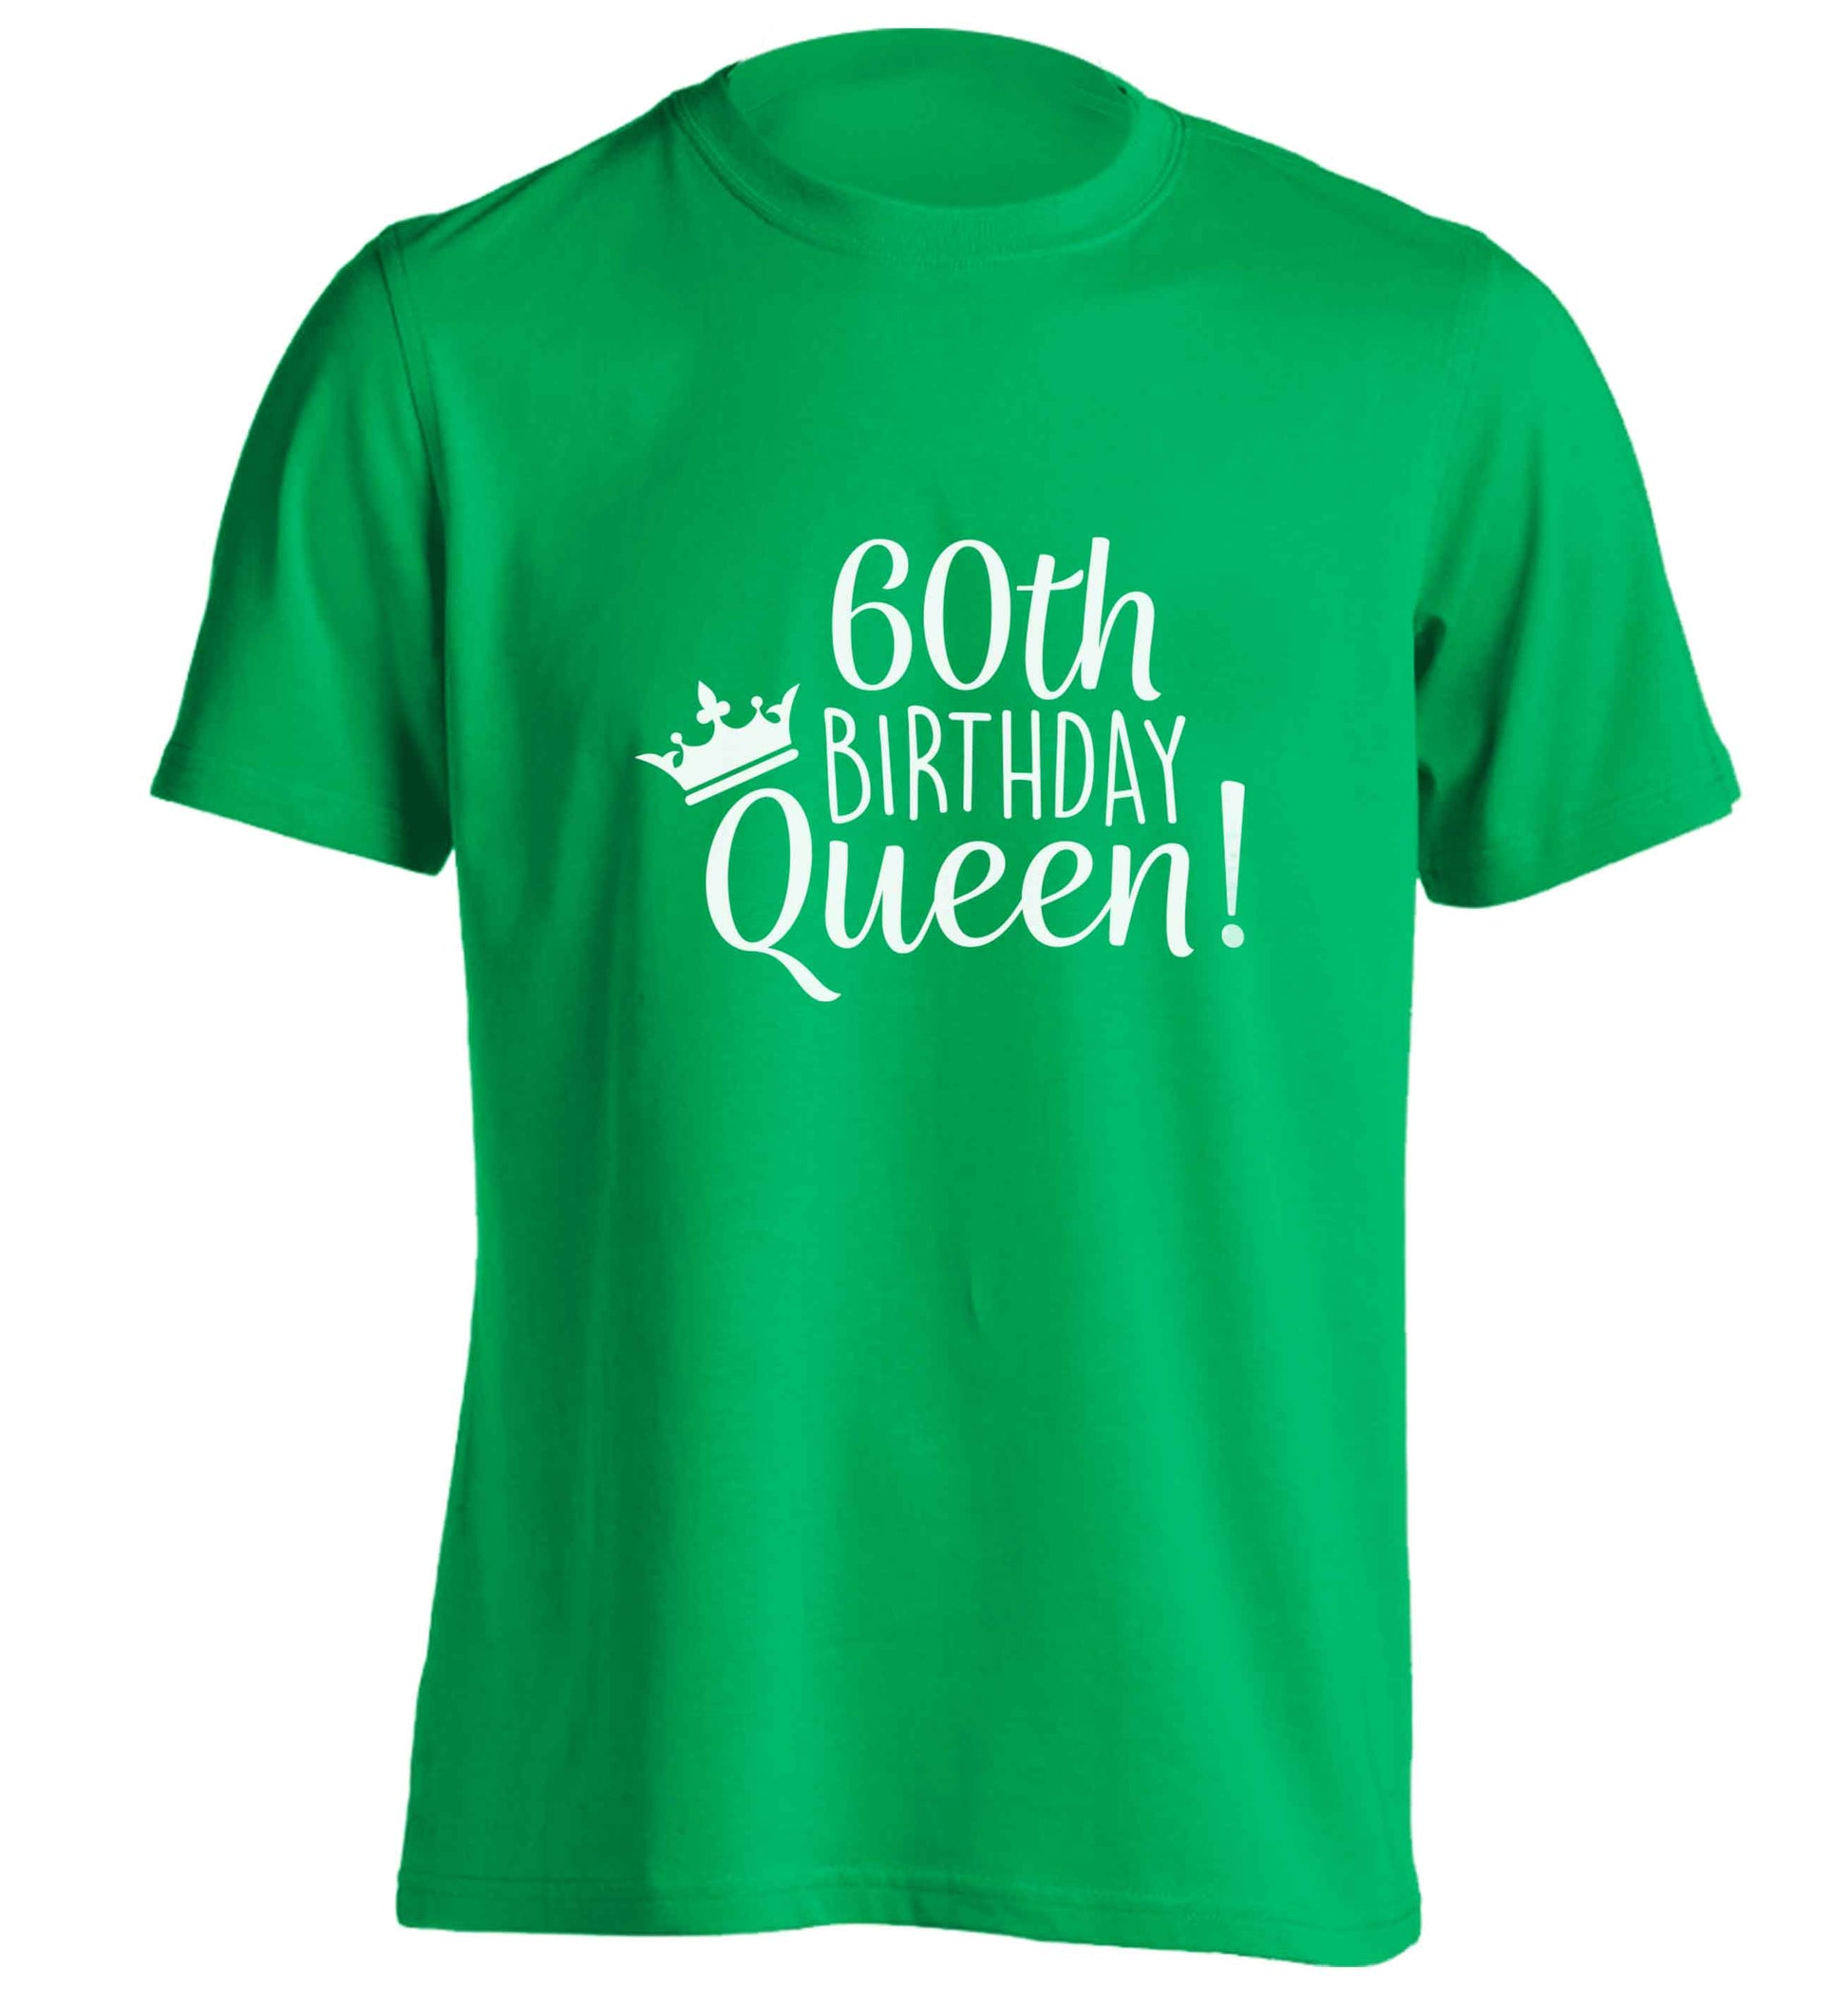 60th birthday Queen adults unisex green Tshirt 2XL